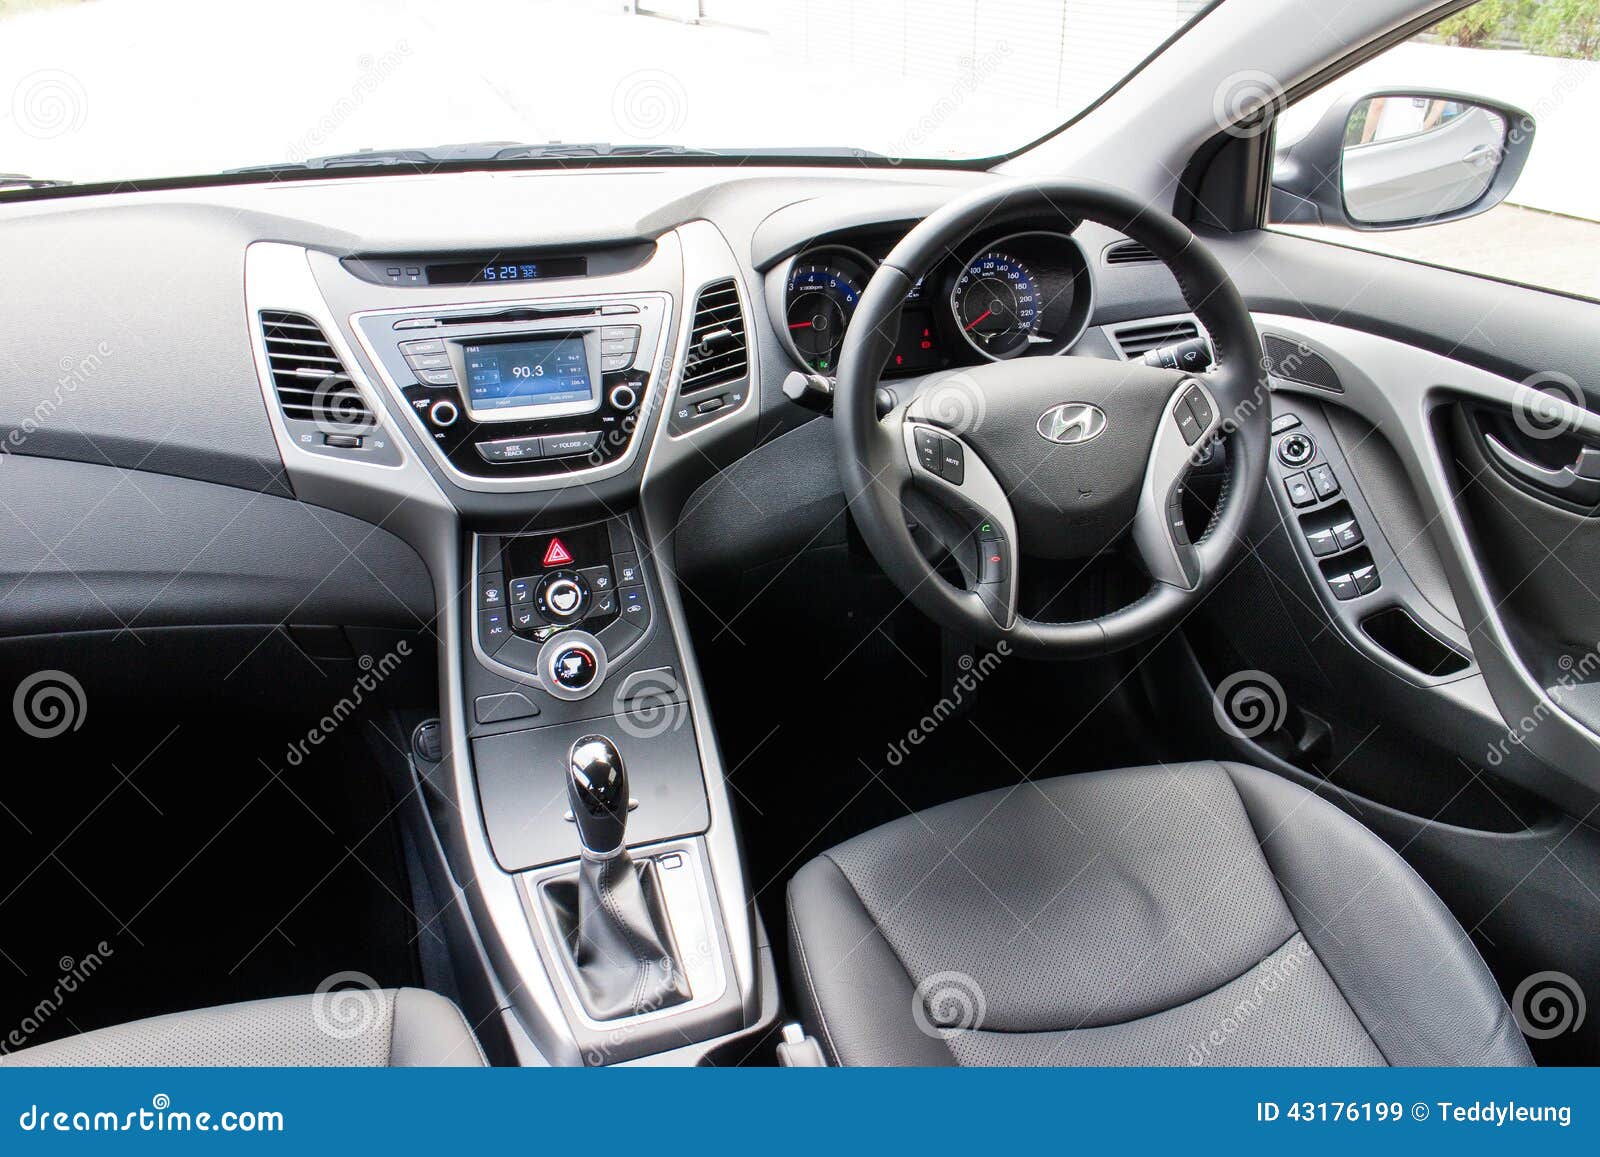 Used 2014 Hyundai Elantra Limited Sedan 4D Prices  Kelley Blue Book